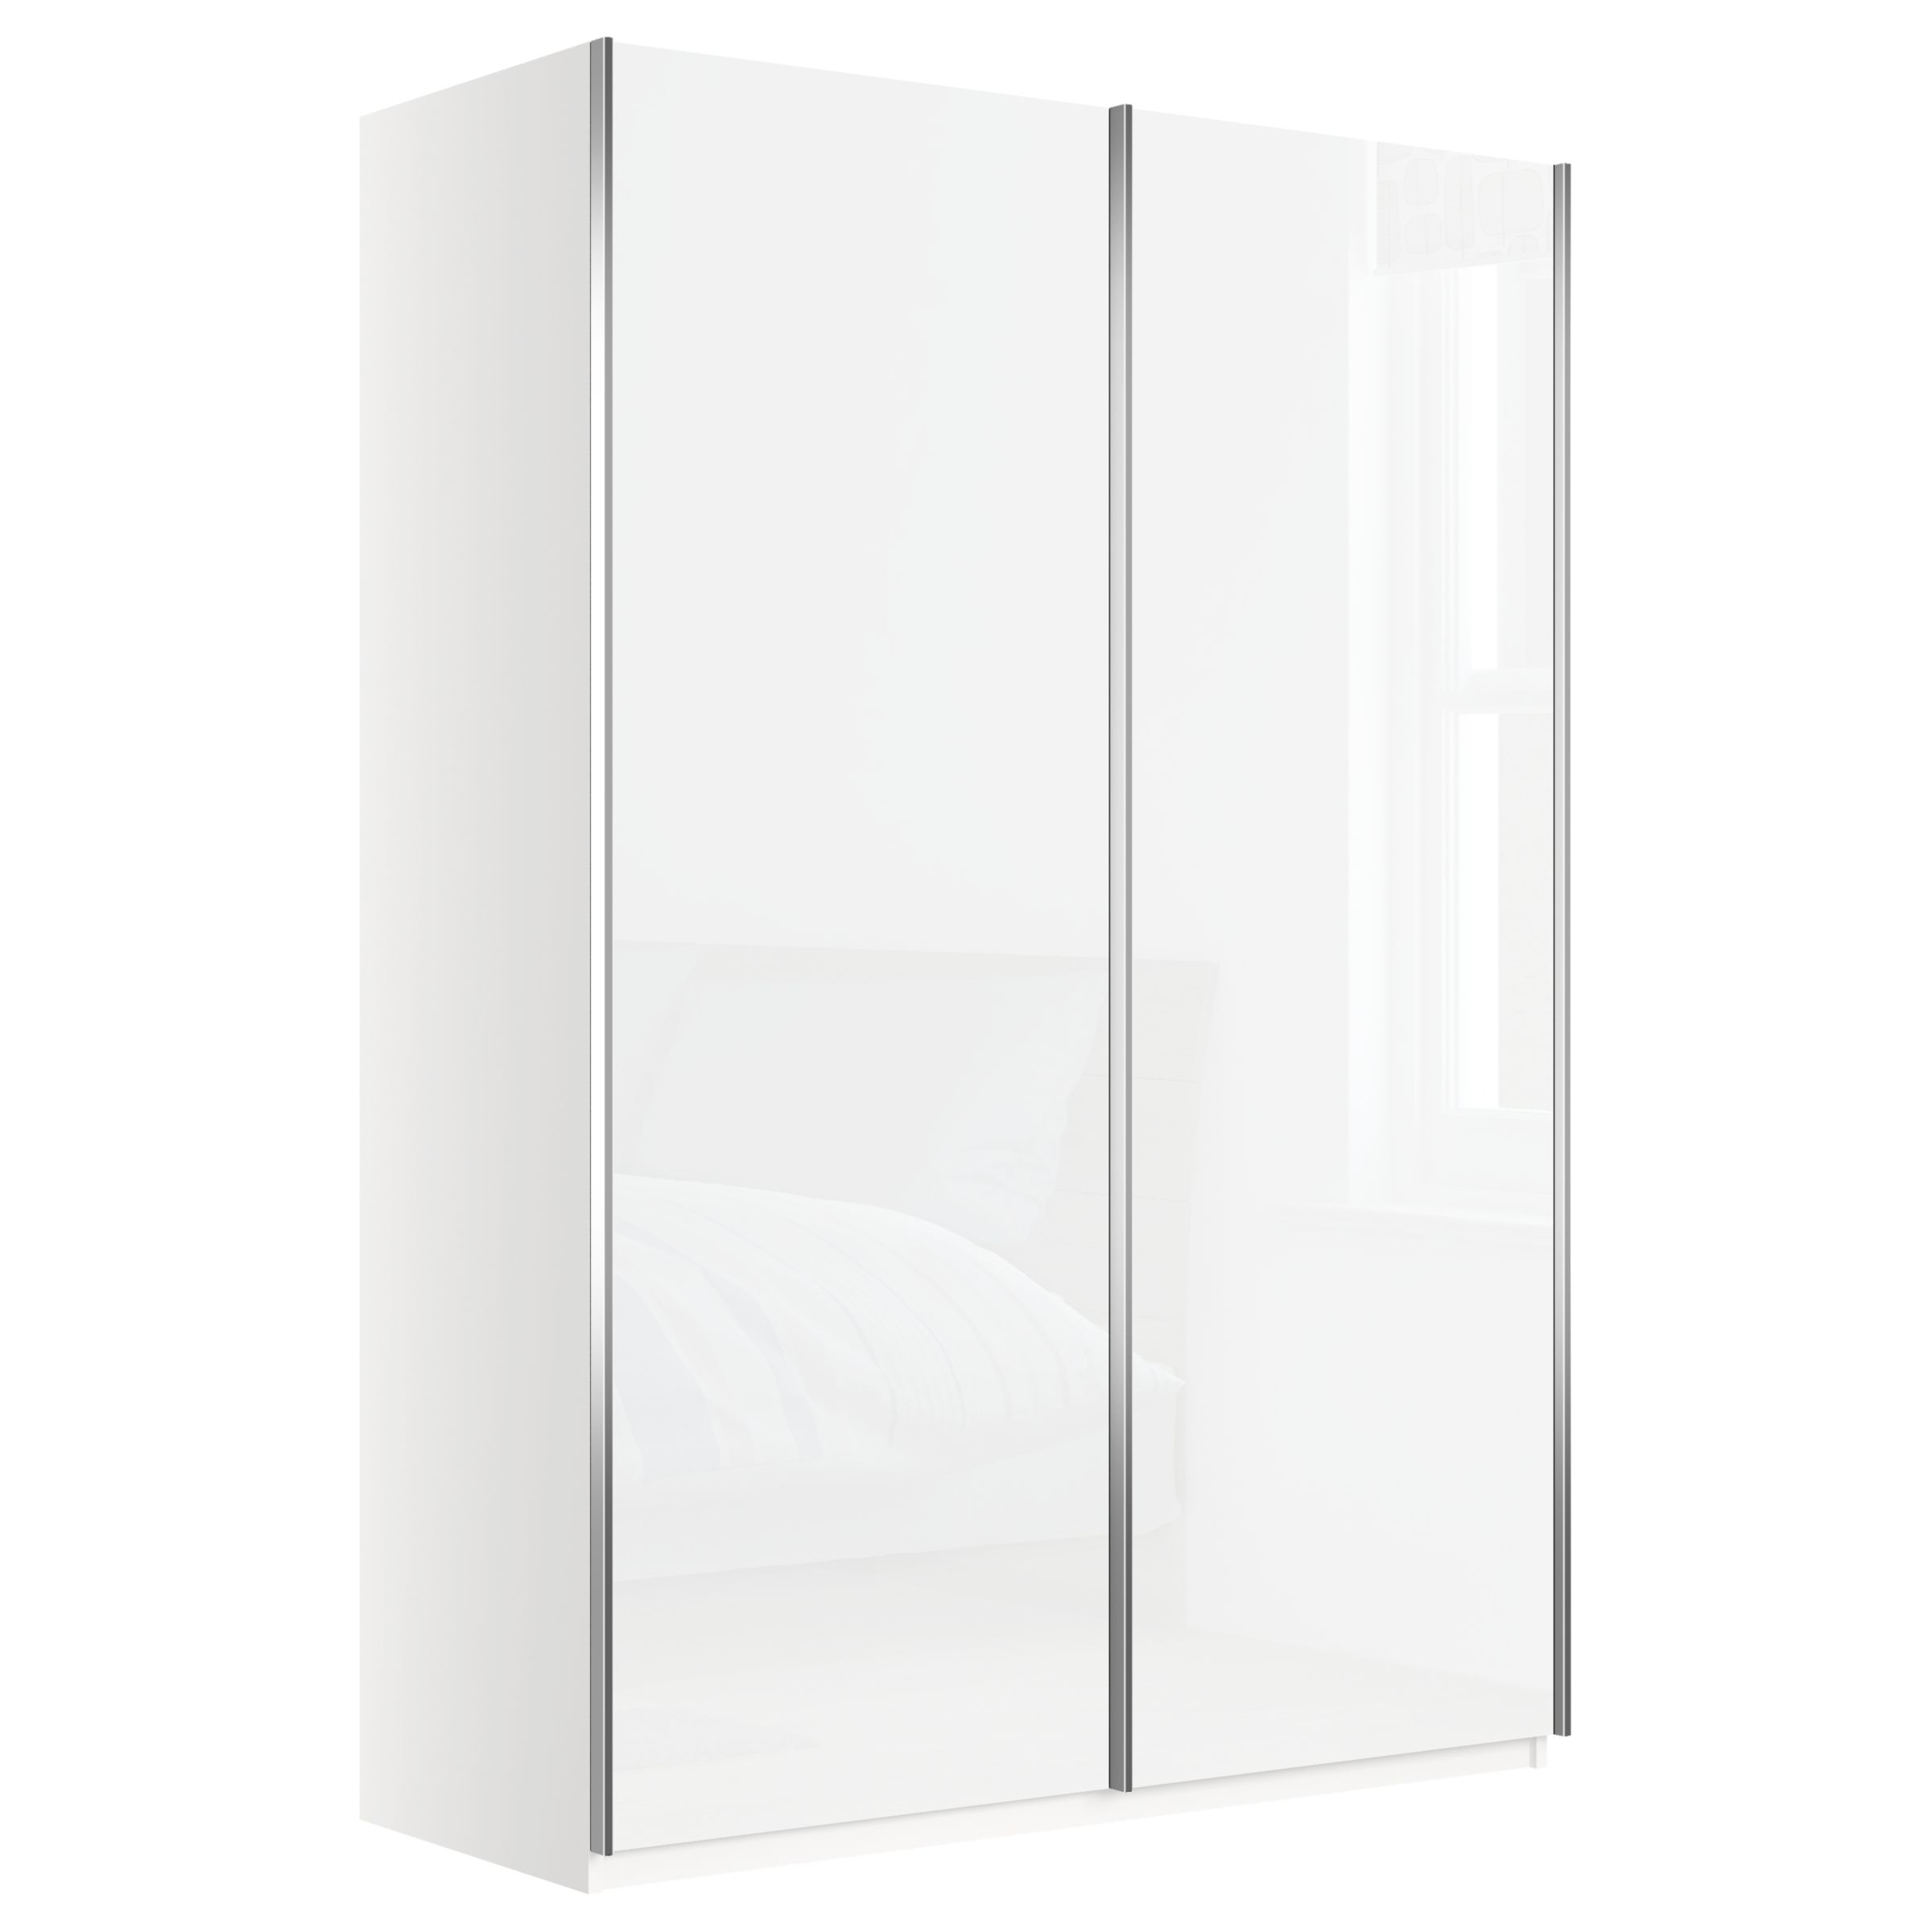 Photo of John lewis elstra 150cm wardrobe with white glass sliding doors